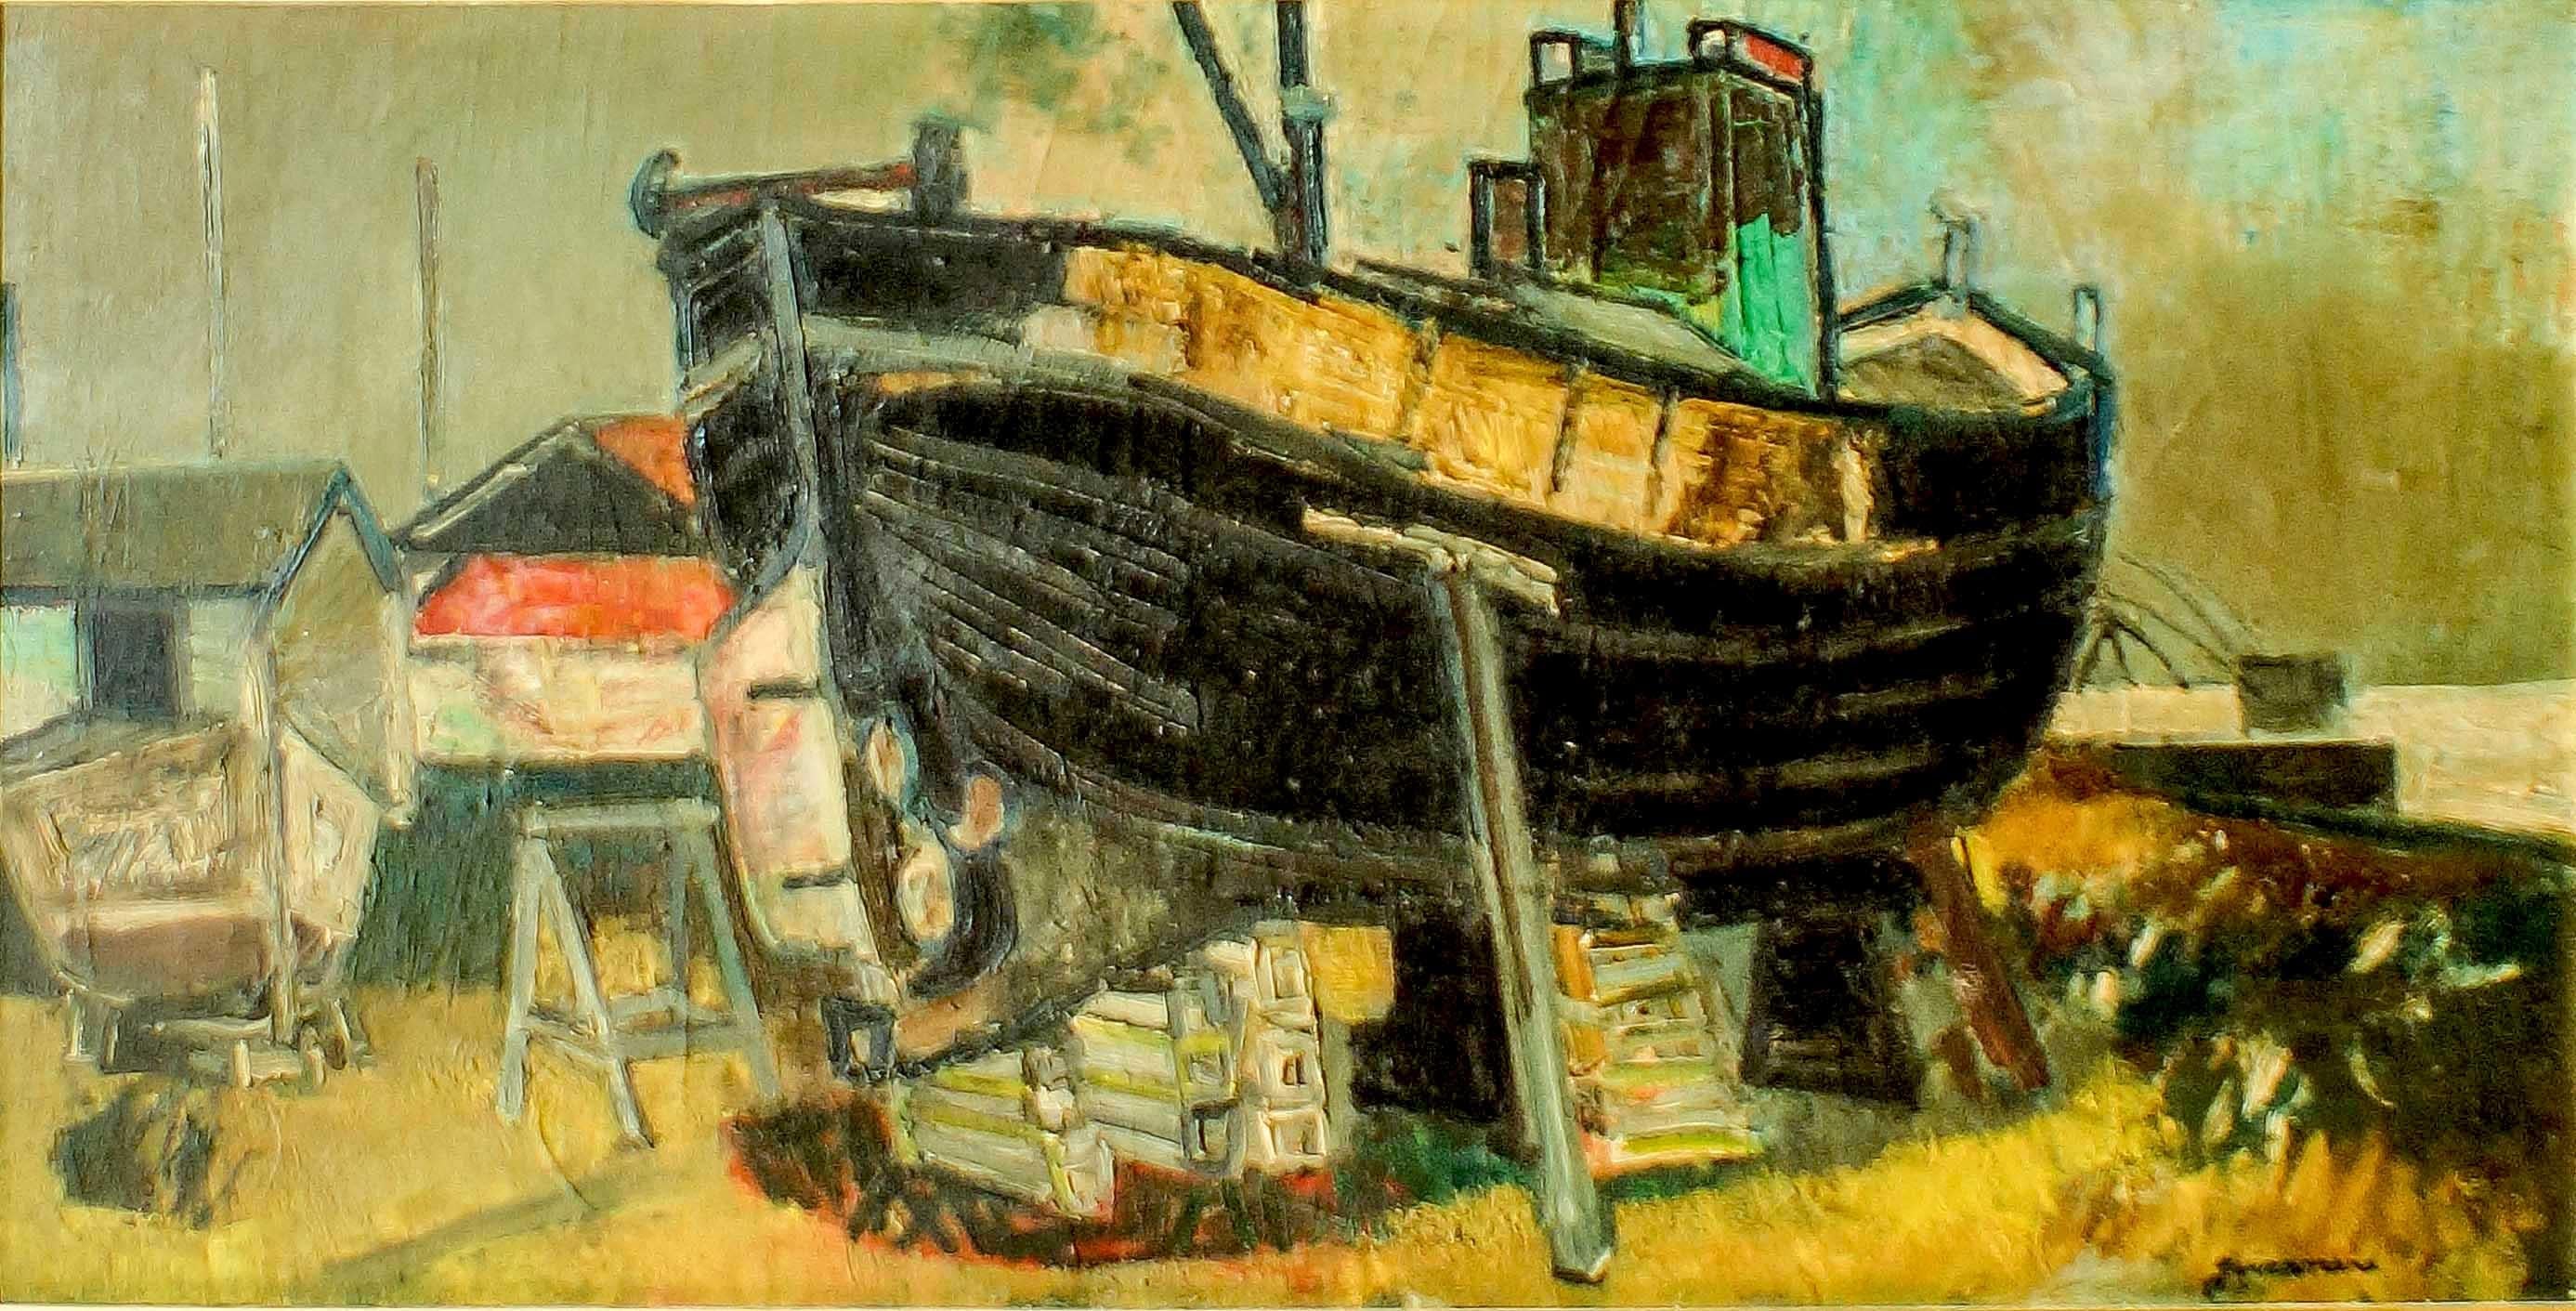 Shipyard - Huile sur toile de Paul Guiramand, 1955 environ en vente 1